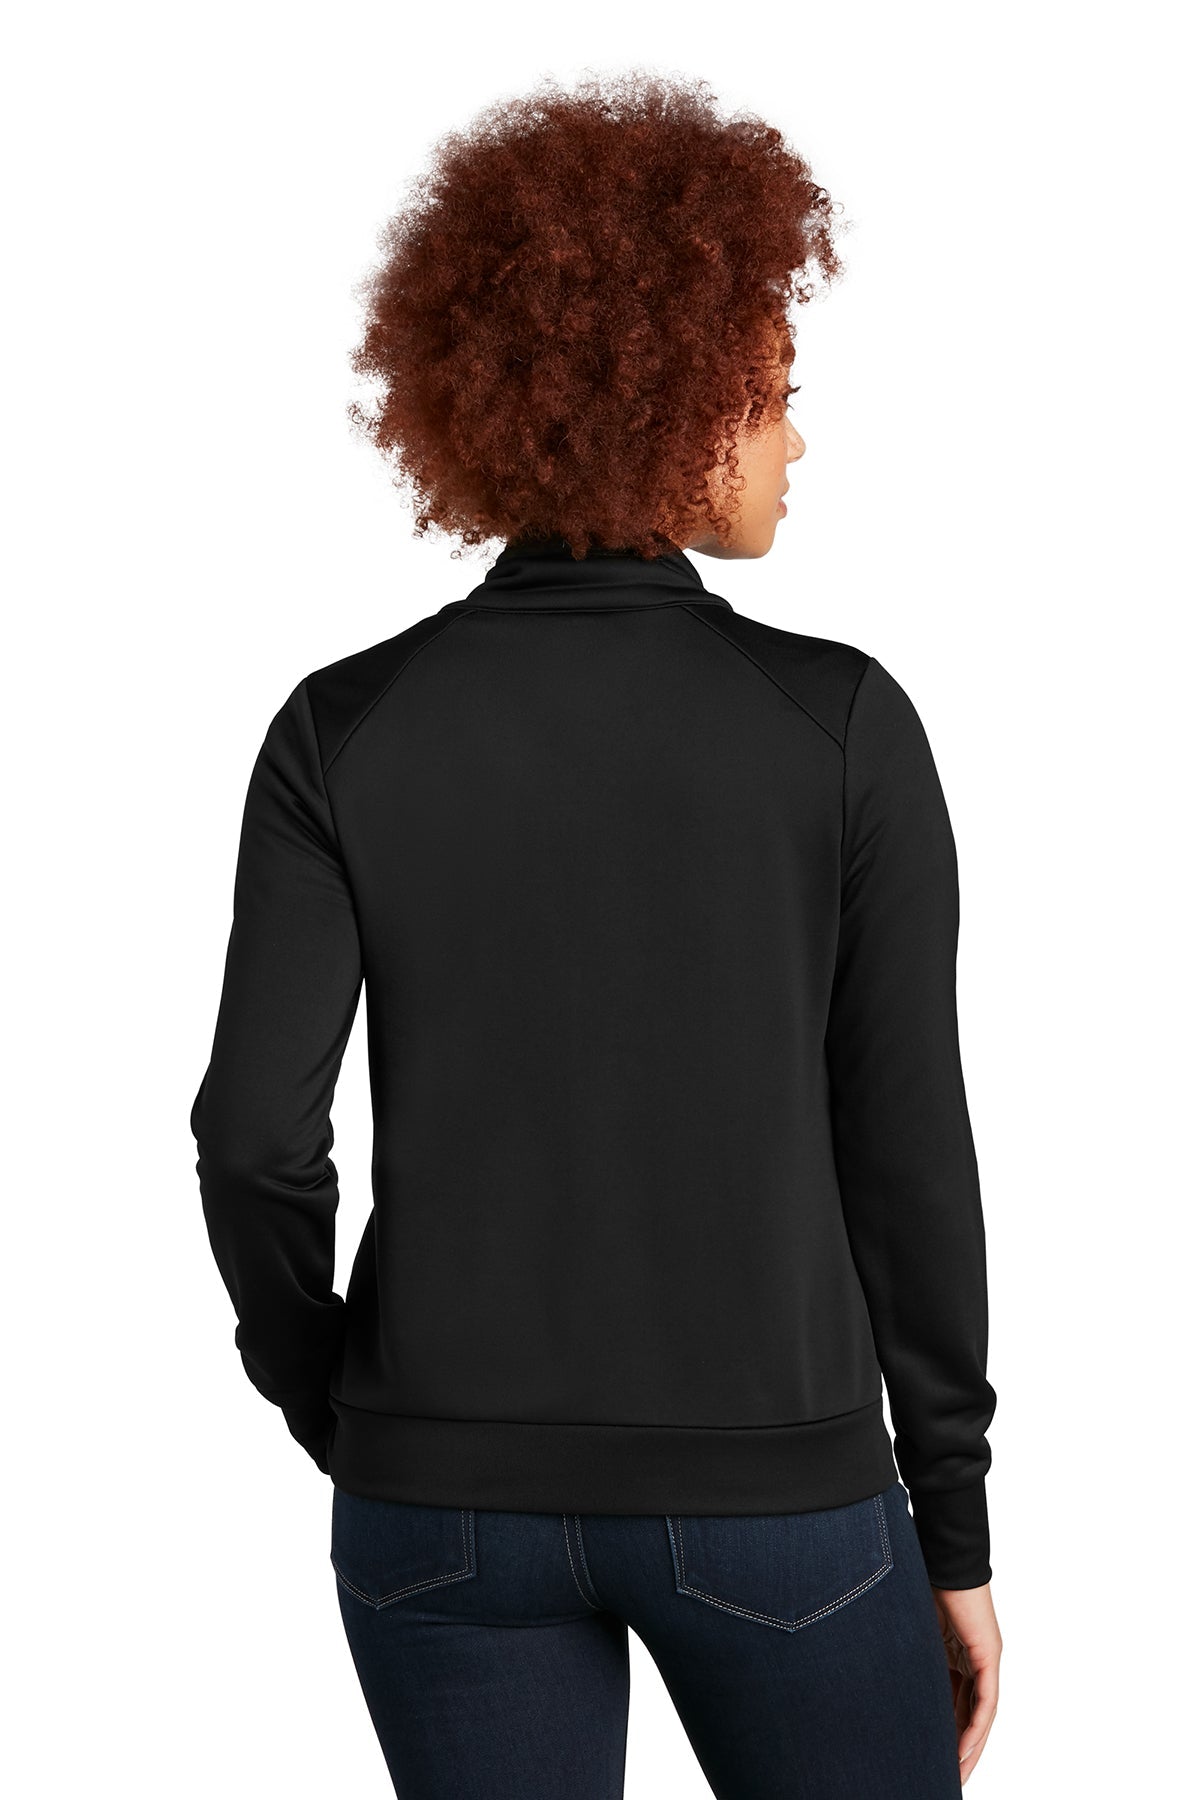 New Era Ladies Performance Terry Full-Zip Customized Jackets, Black